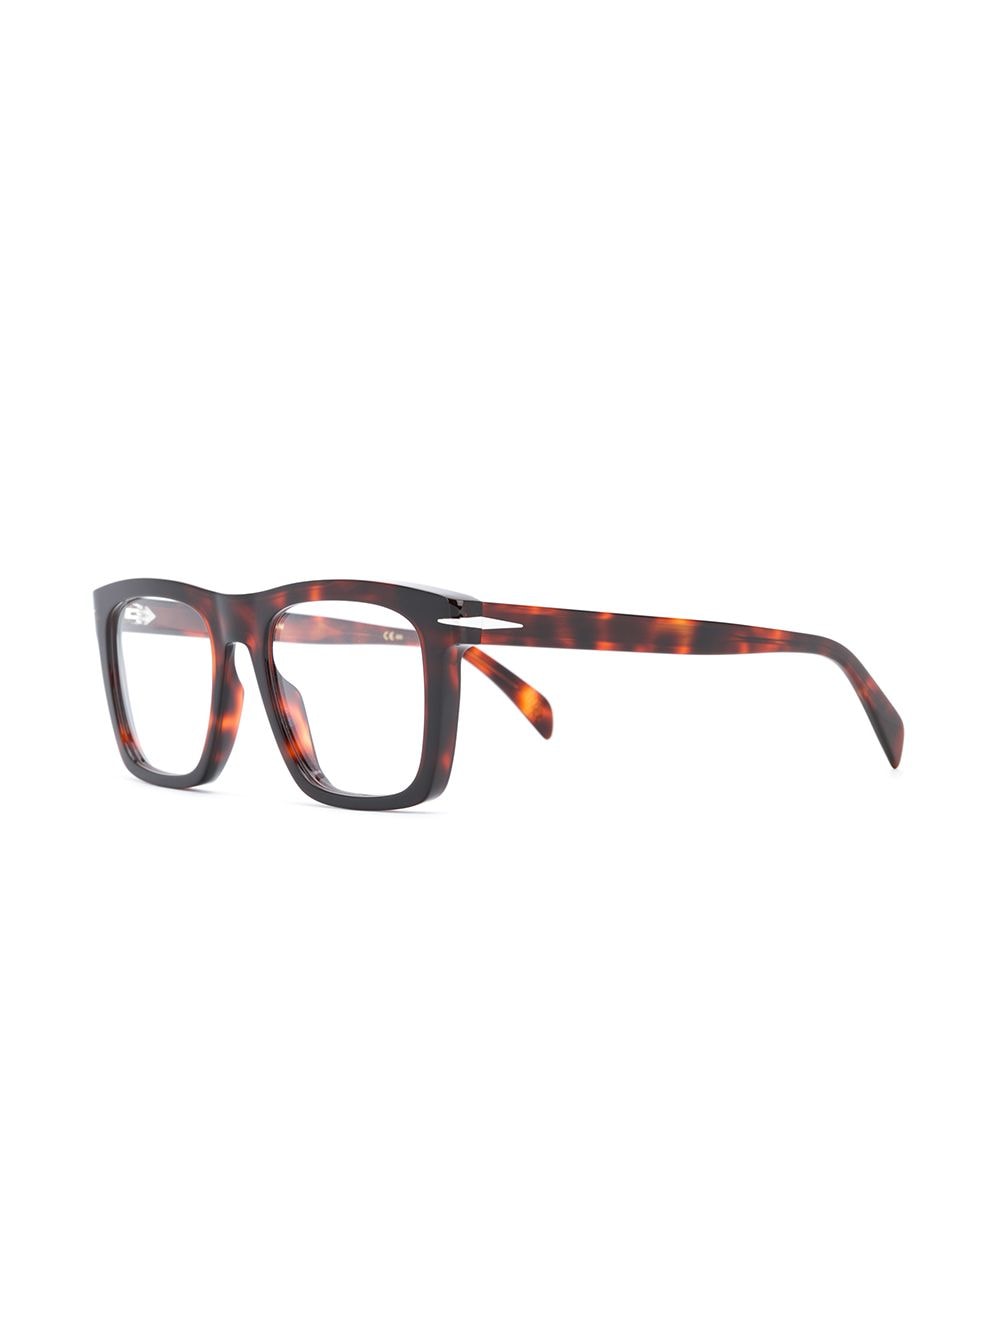 Image 2 of Eyewear by David Beckham rectangular frame tortoise-shell glasses